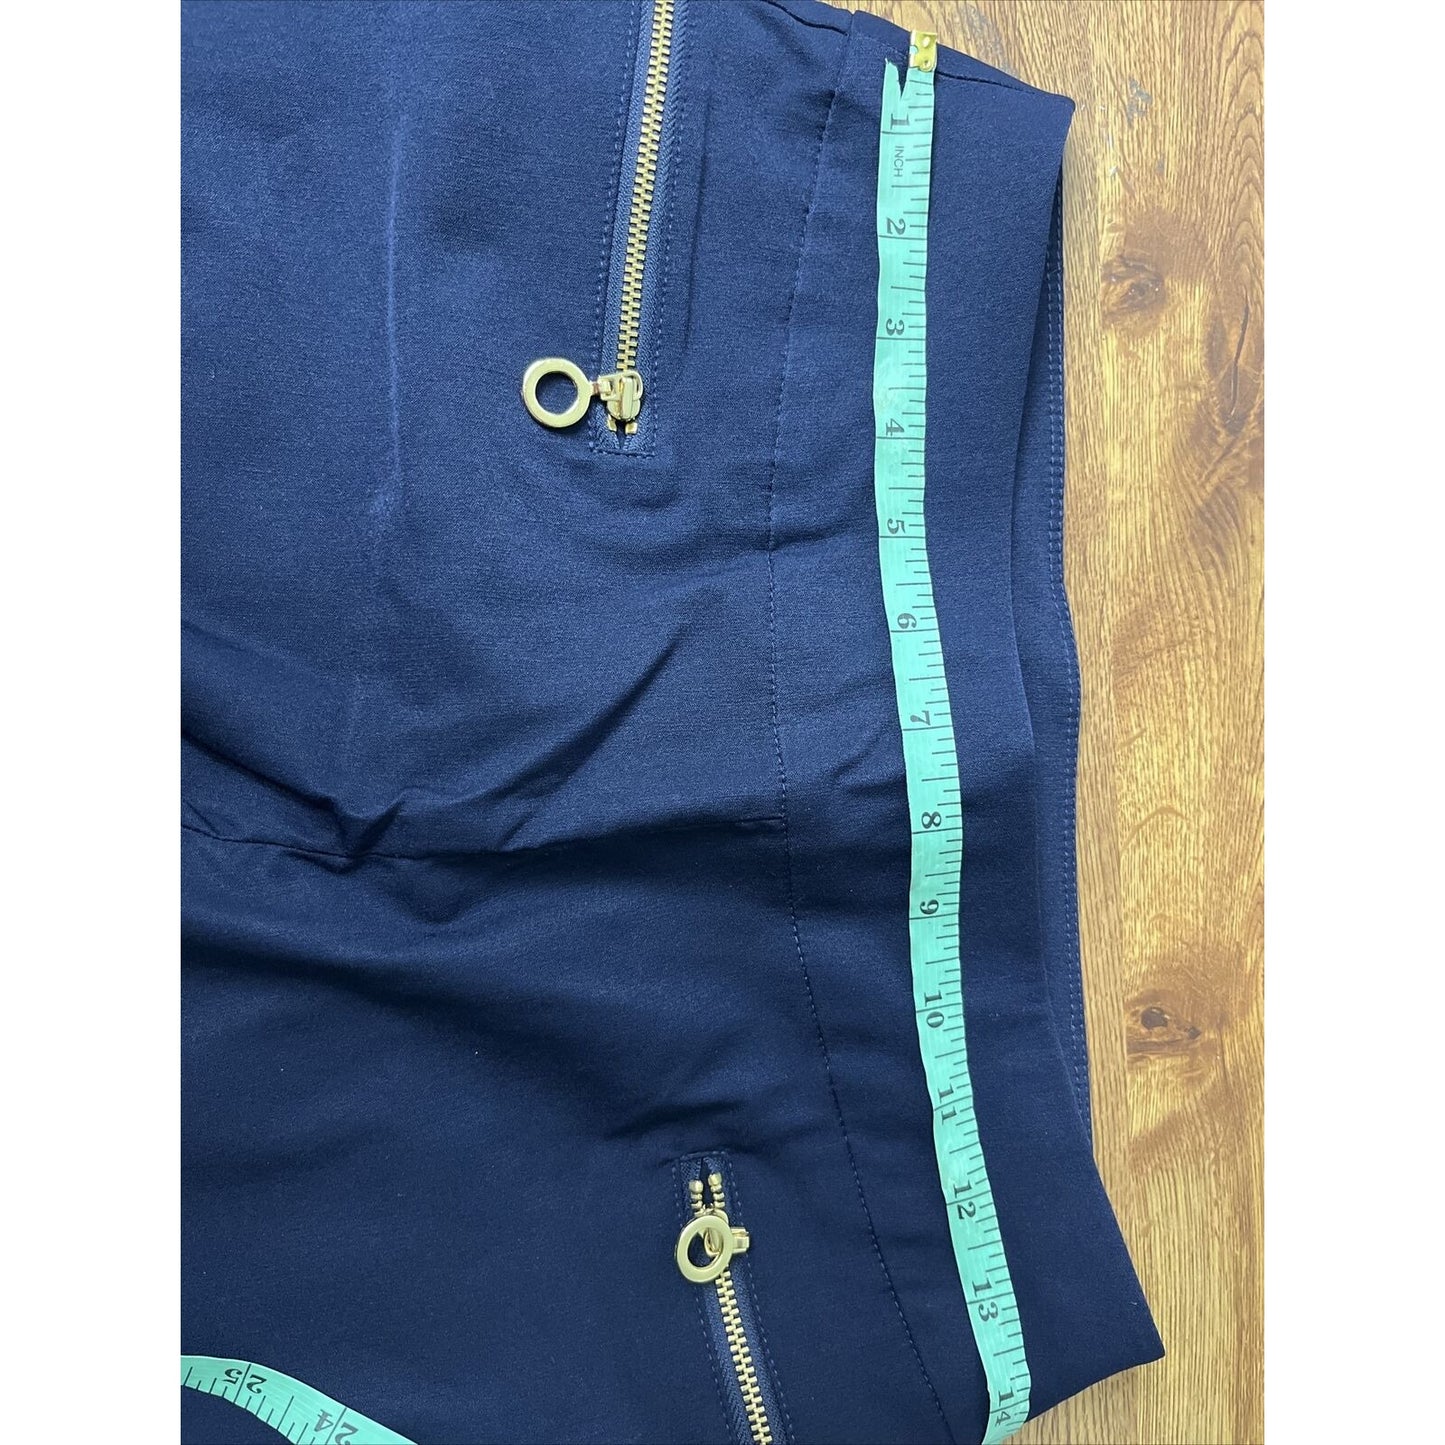 Susan Graver Women's Petite Pants 4P Ultra Pull-on Ankle w/Zip Pock Navy A378571